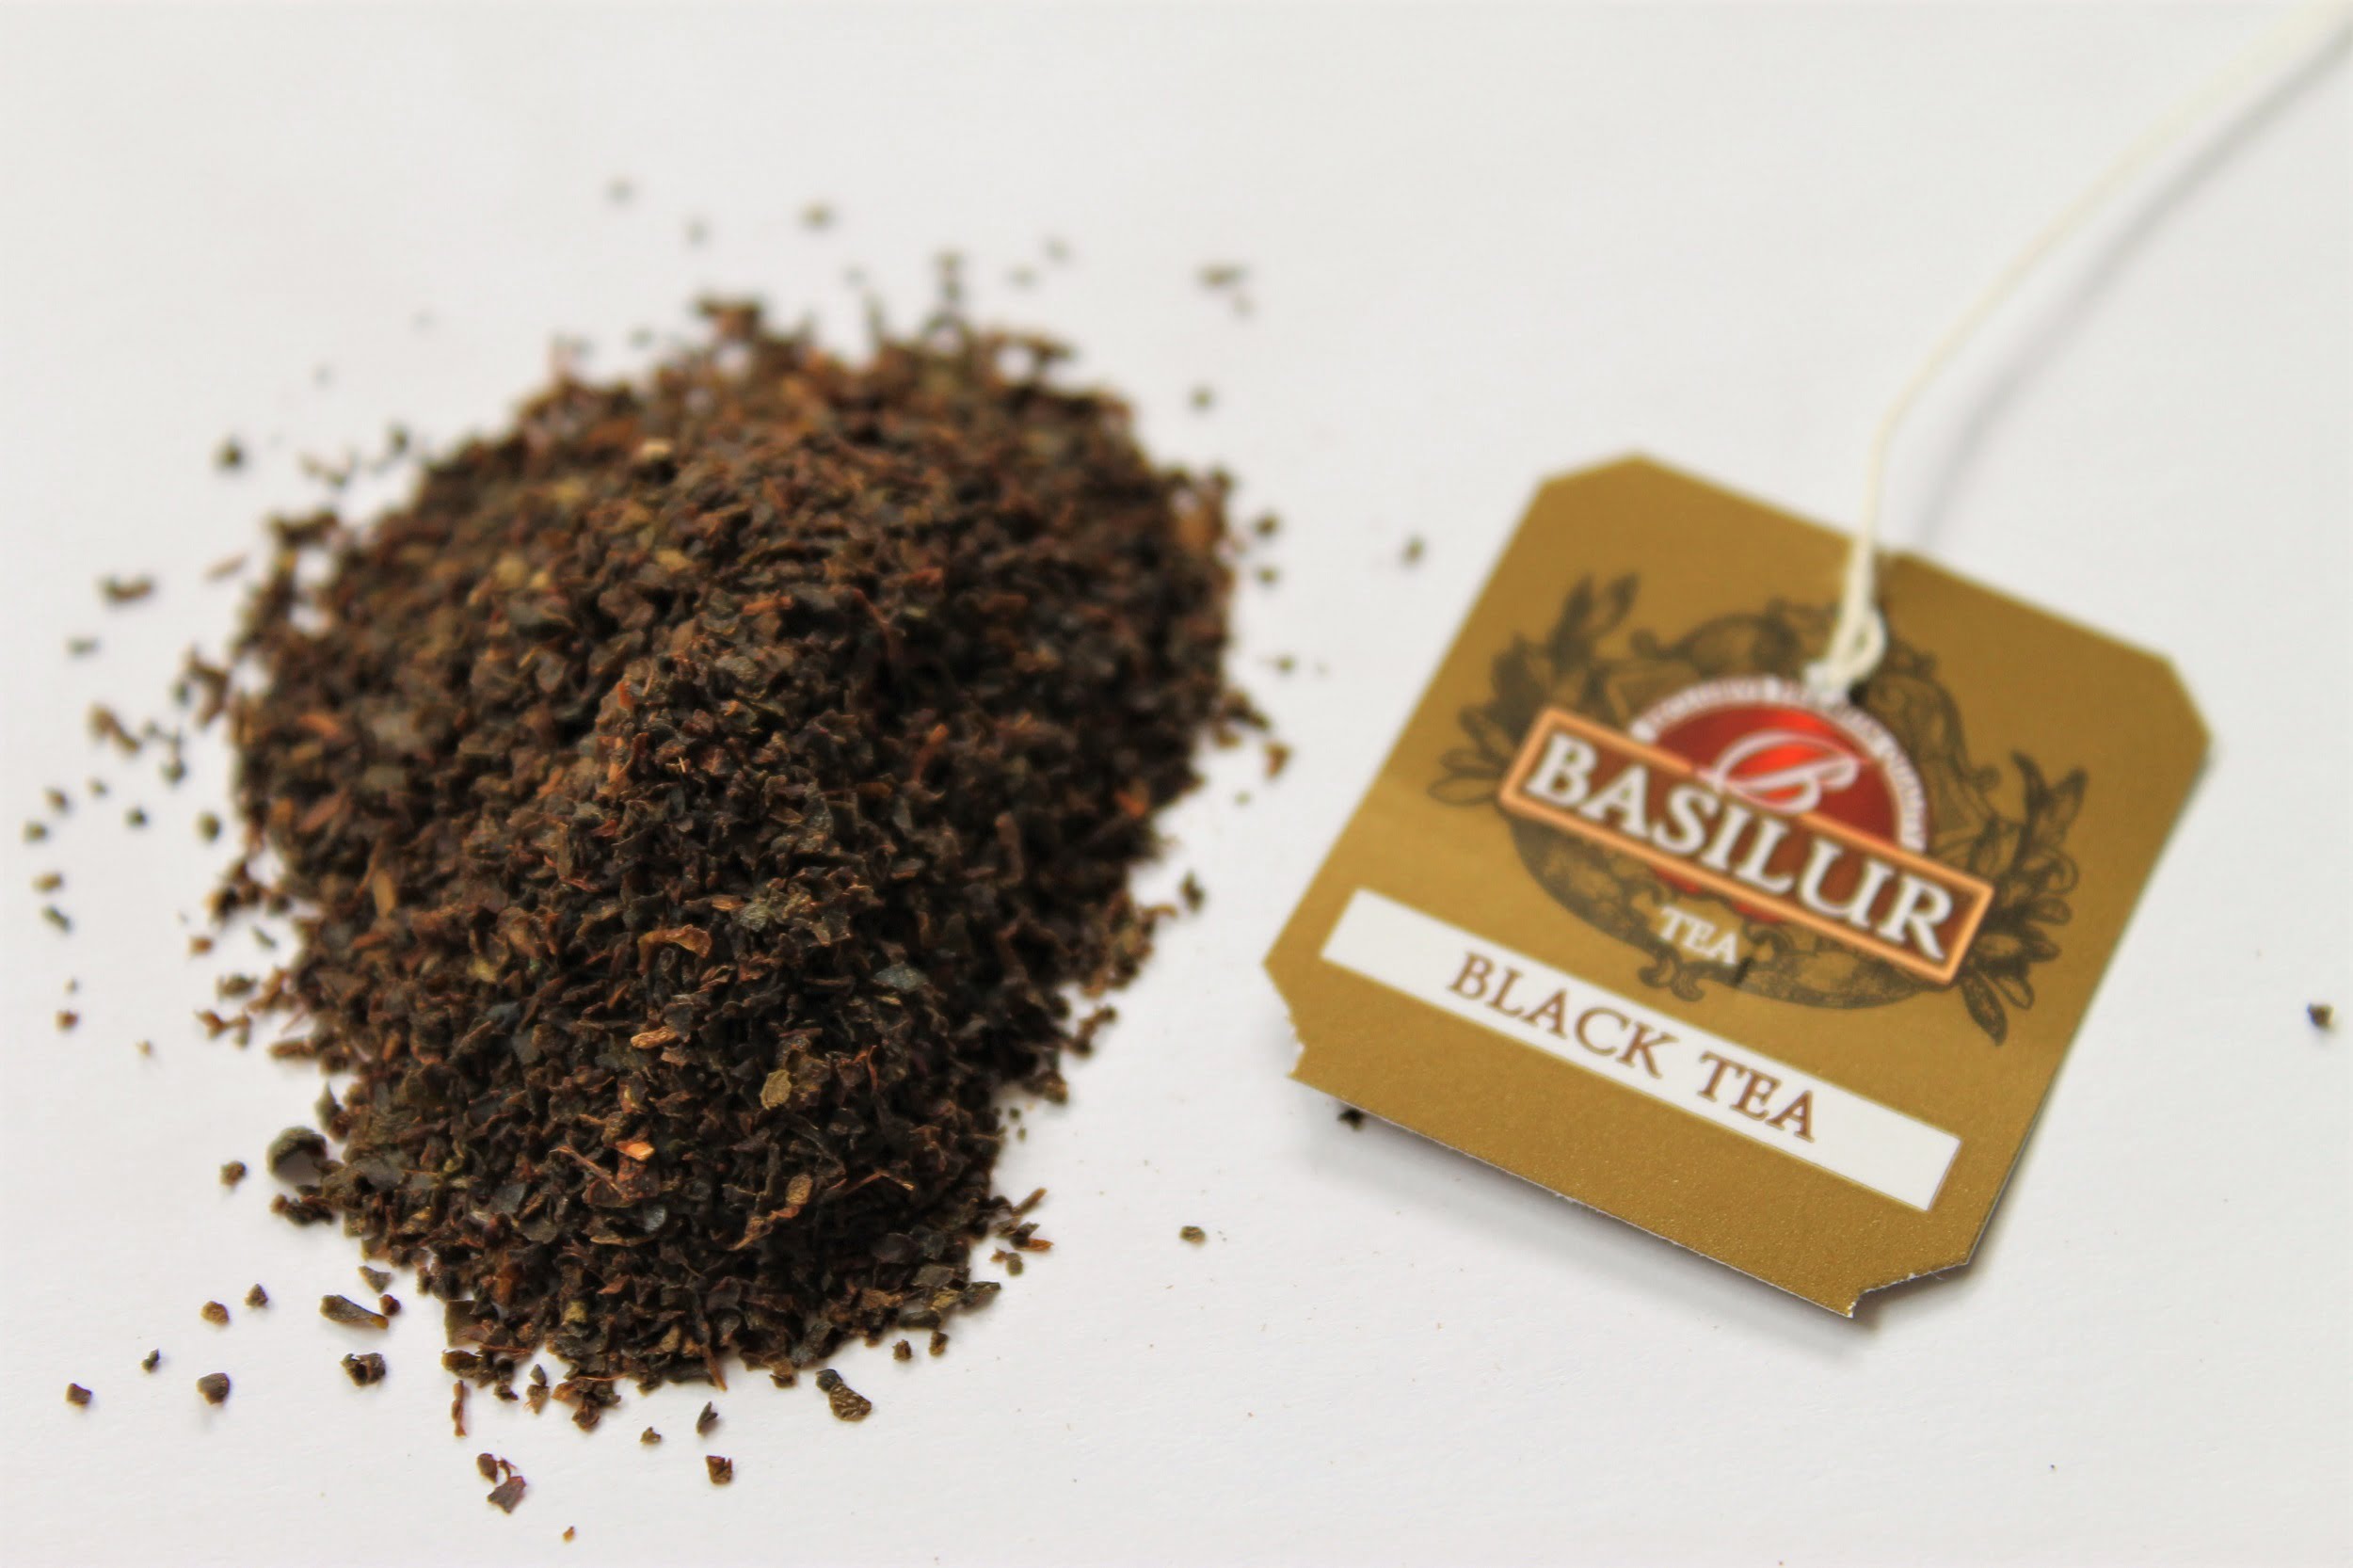 basilur black tea bags